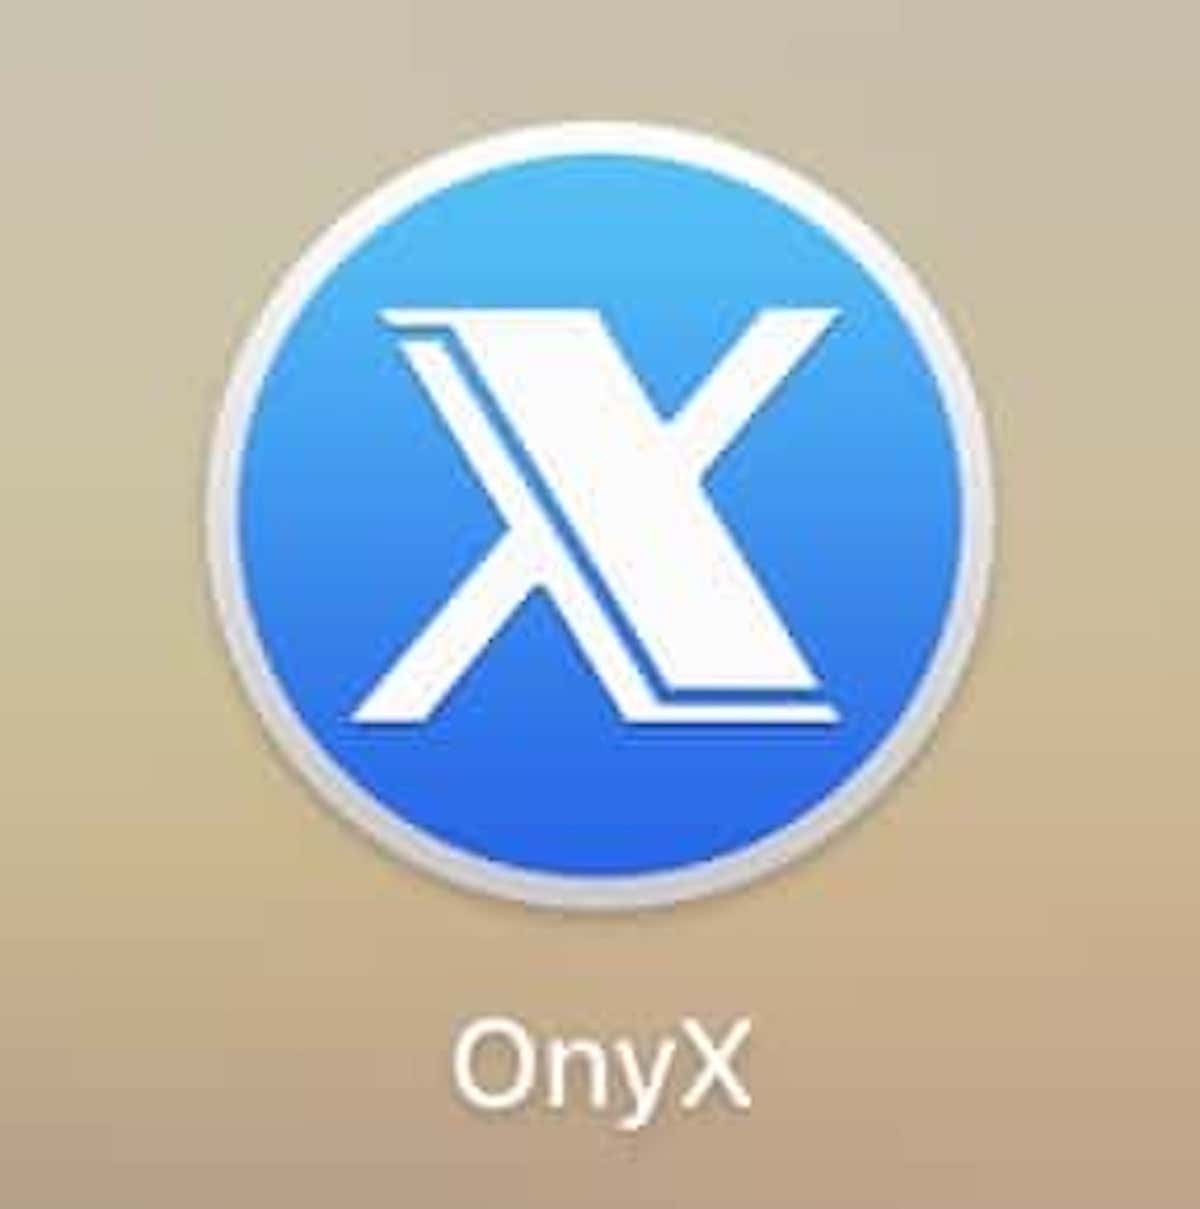 onyx mac high sierra 10.13 6 download